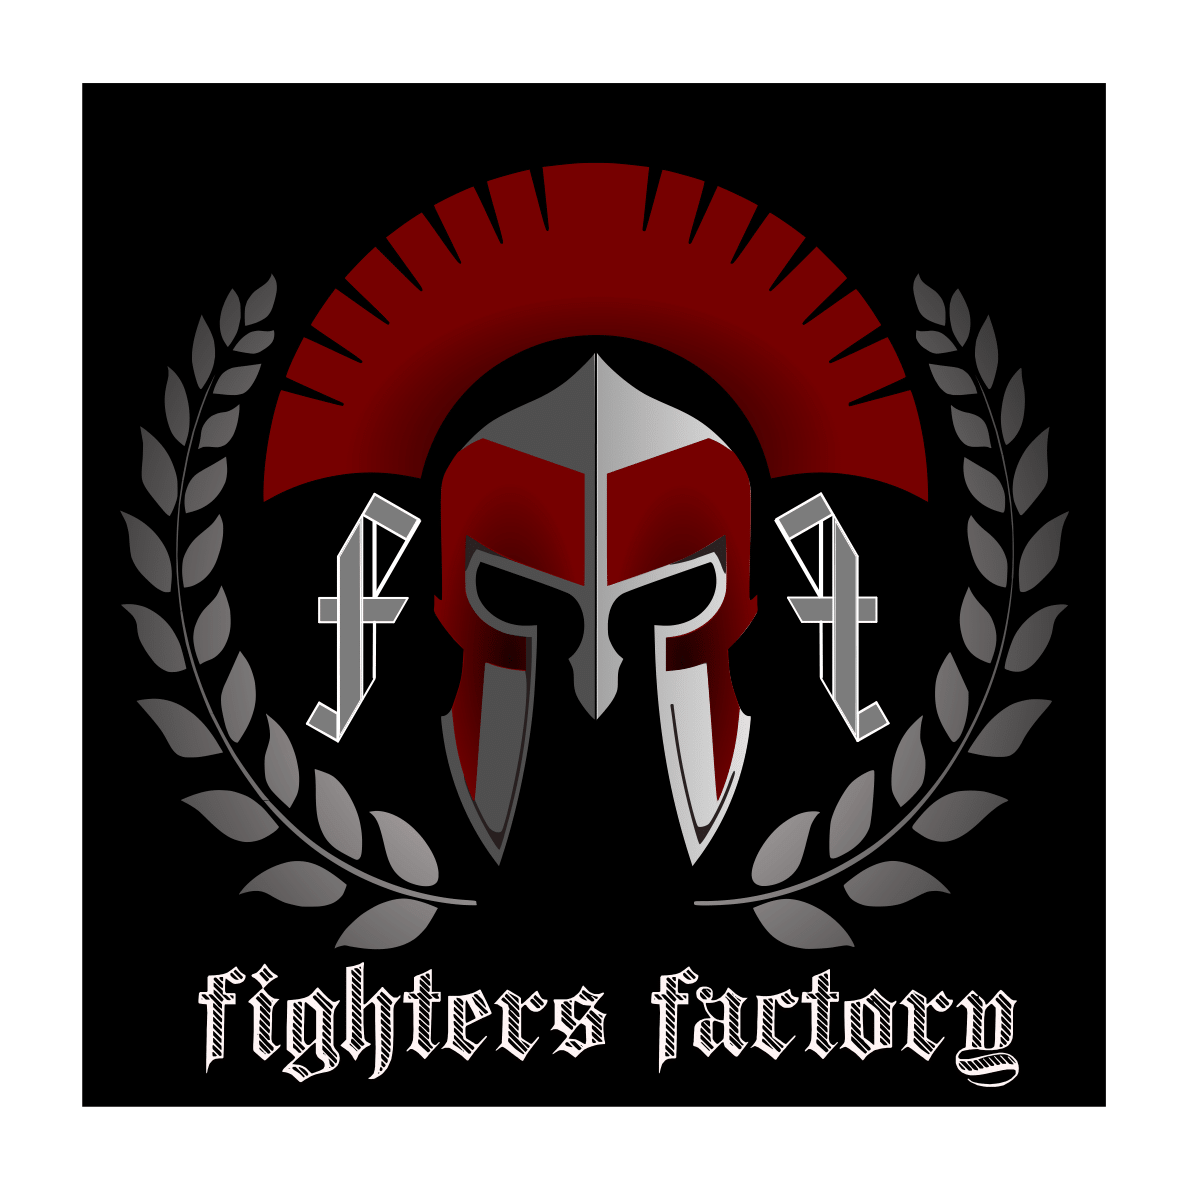 Fightersfactory